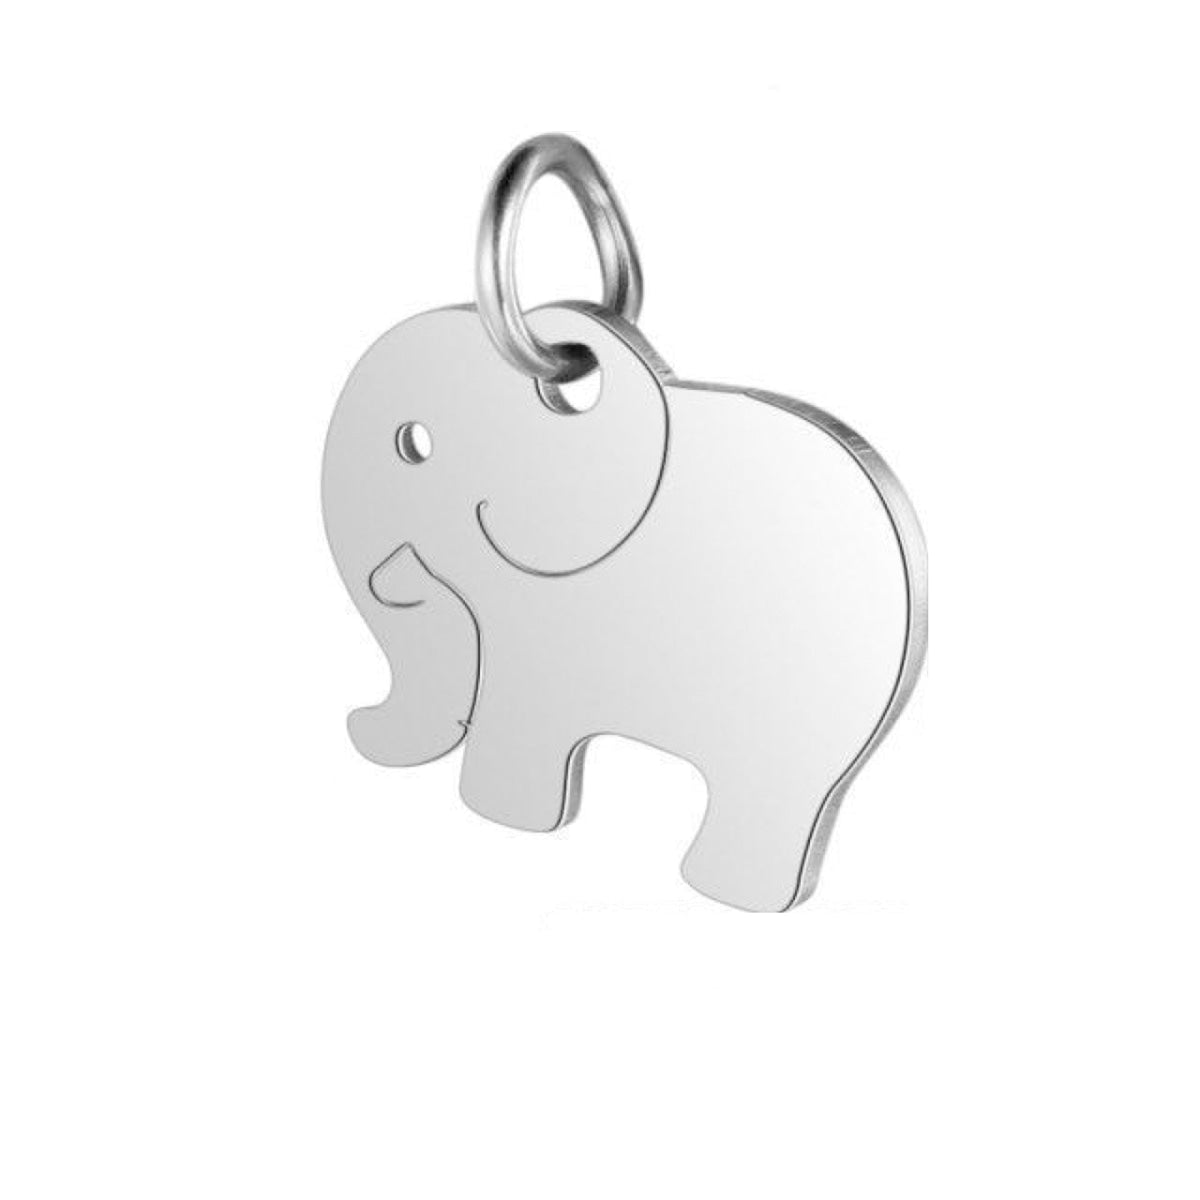 2pcs S/S Charm DIY Charms Jewellery Making Om Dog Paw Cat Animal Elephant Teddy Yoga Lotus Heart - Elephant 14x16mm - - Asia Sell